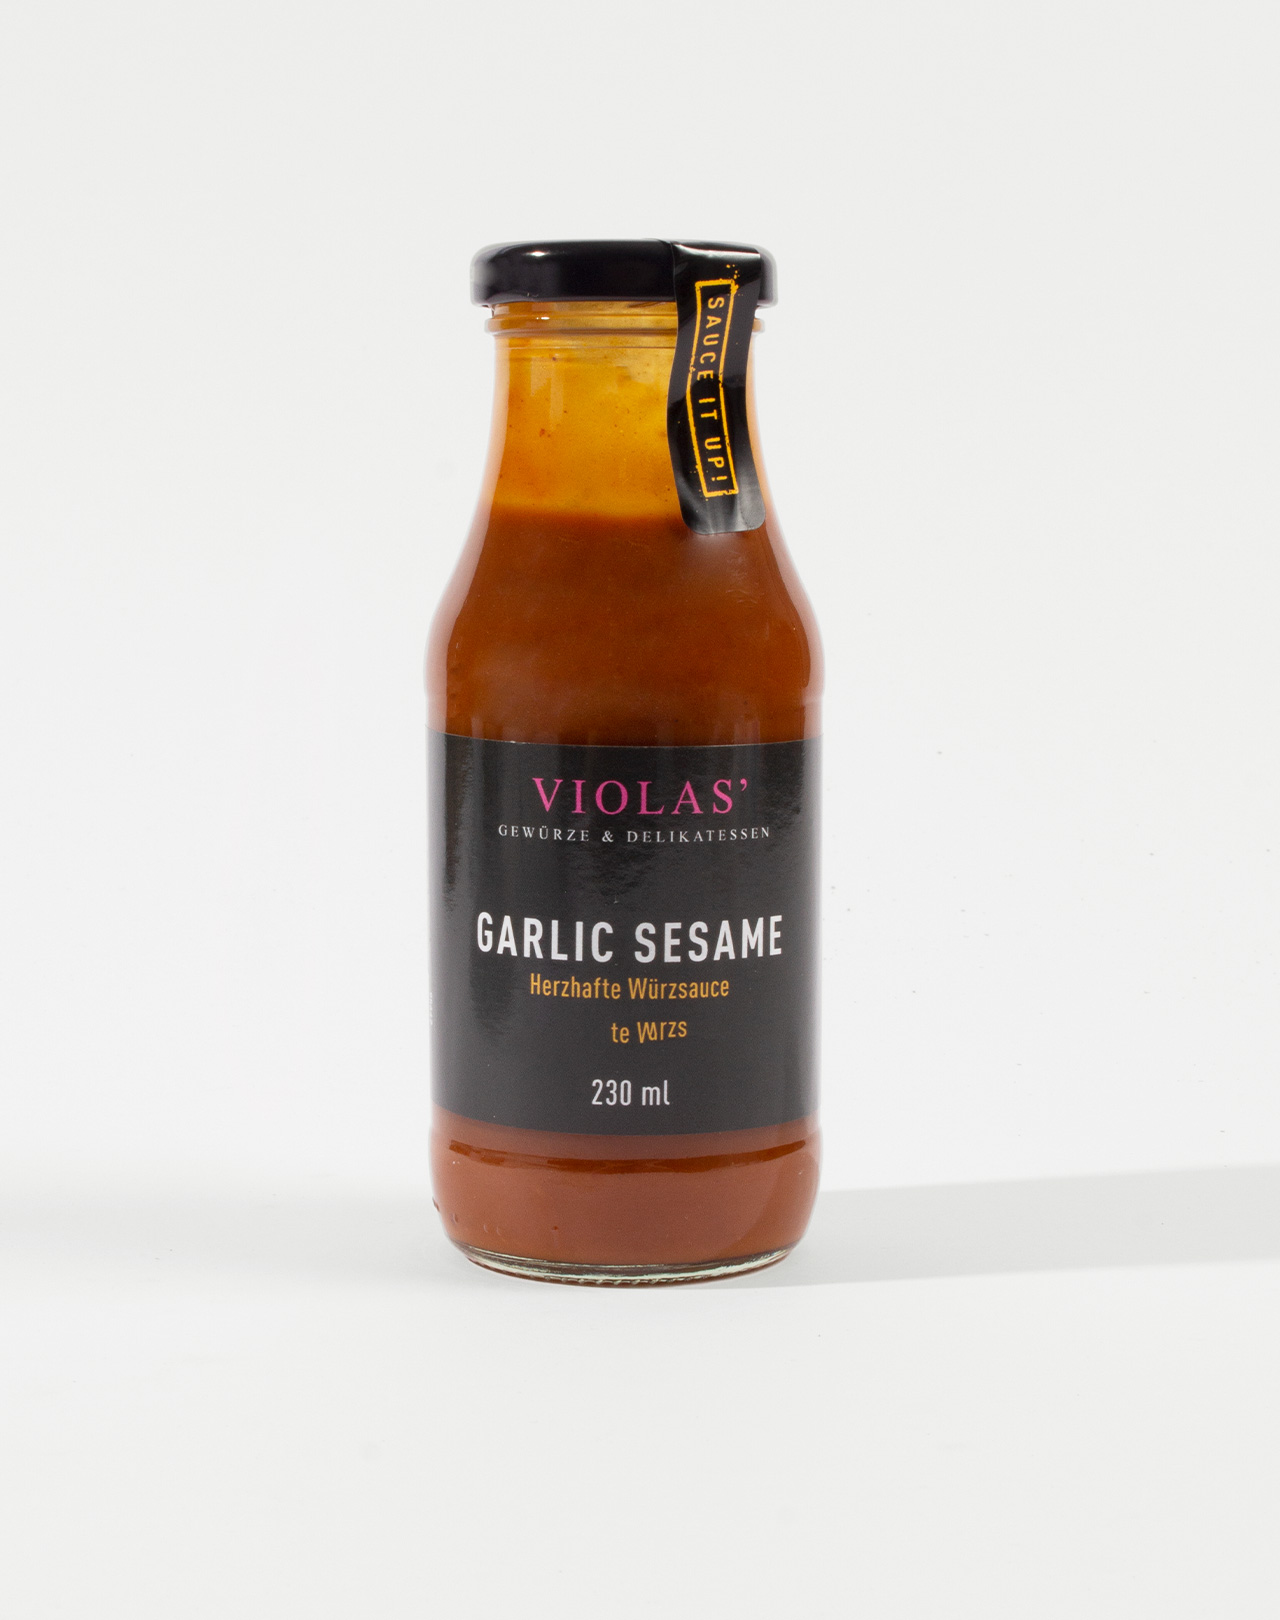 Sauce it up! Garlic Sesame